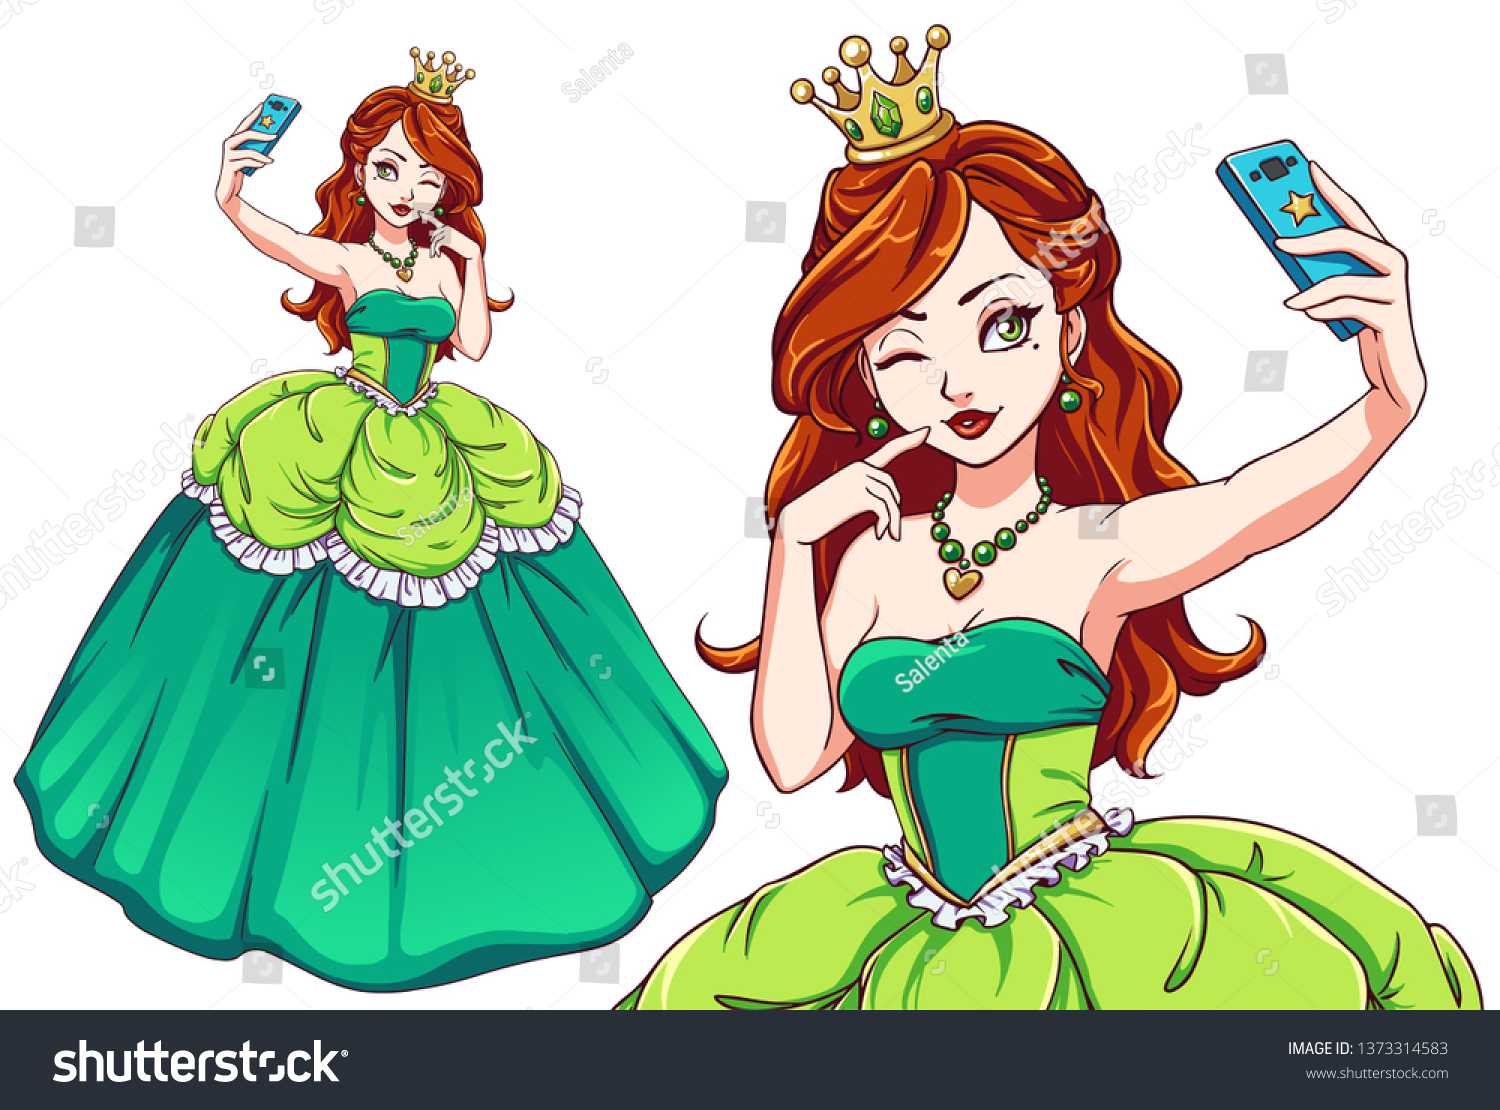 All Disney Princesses Taking A Selfie